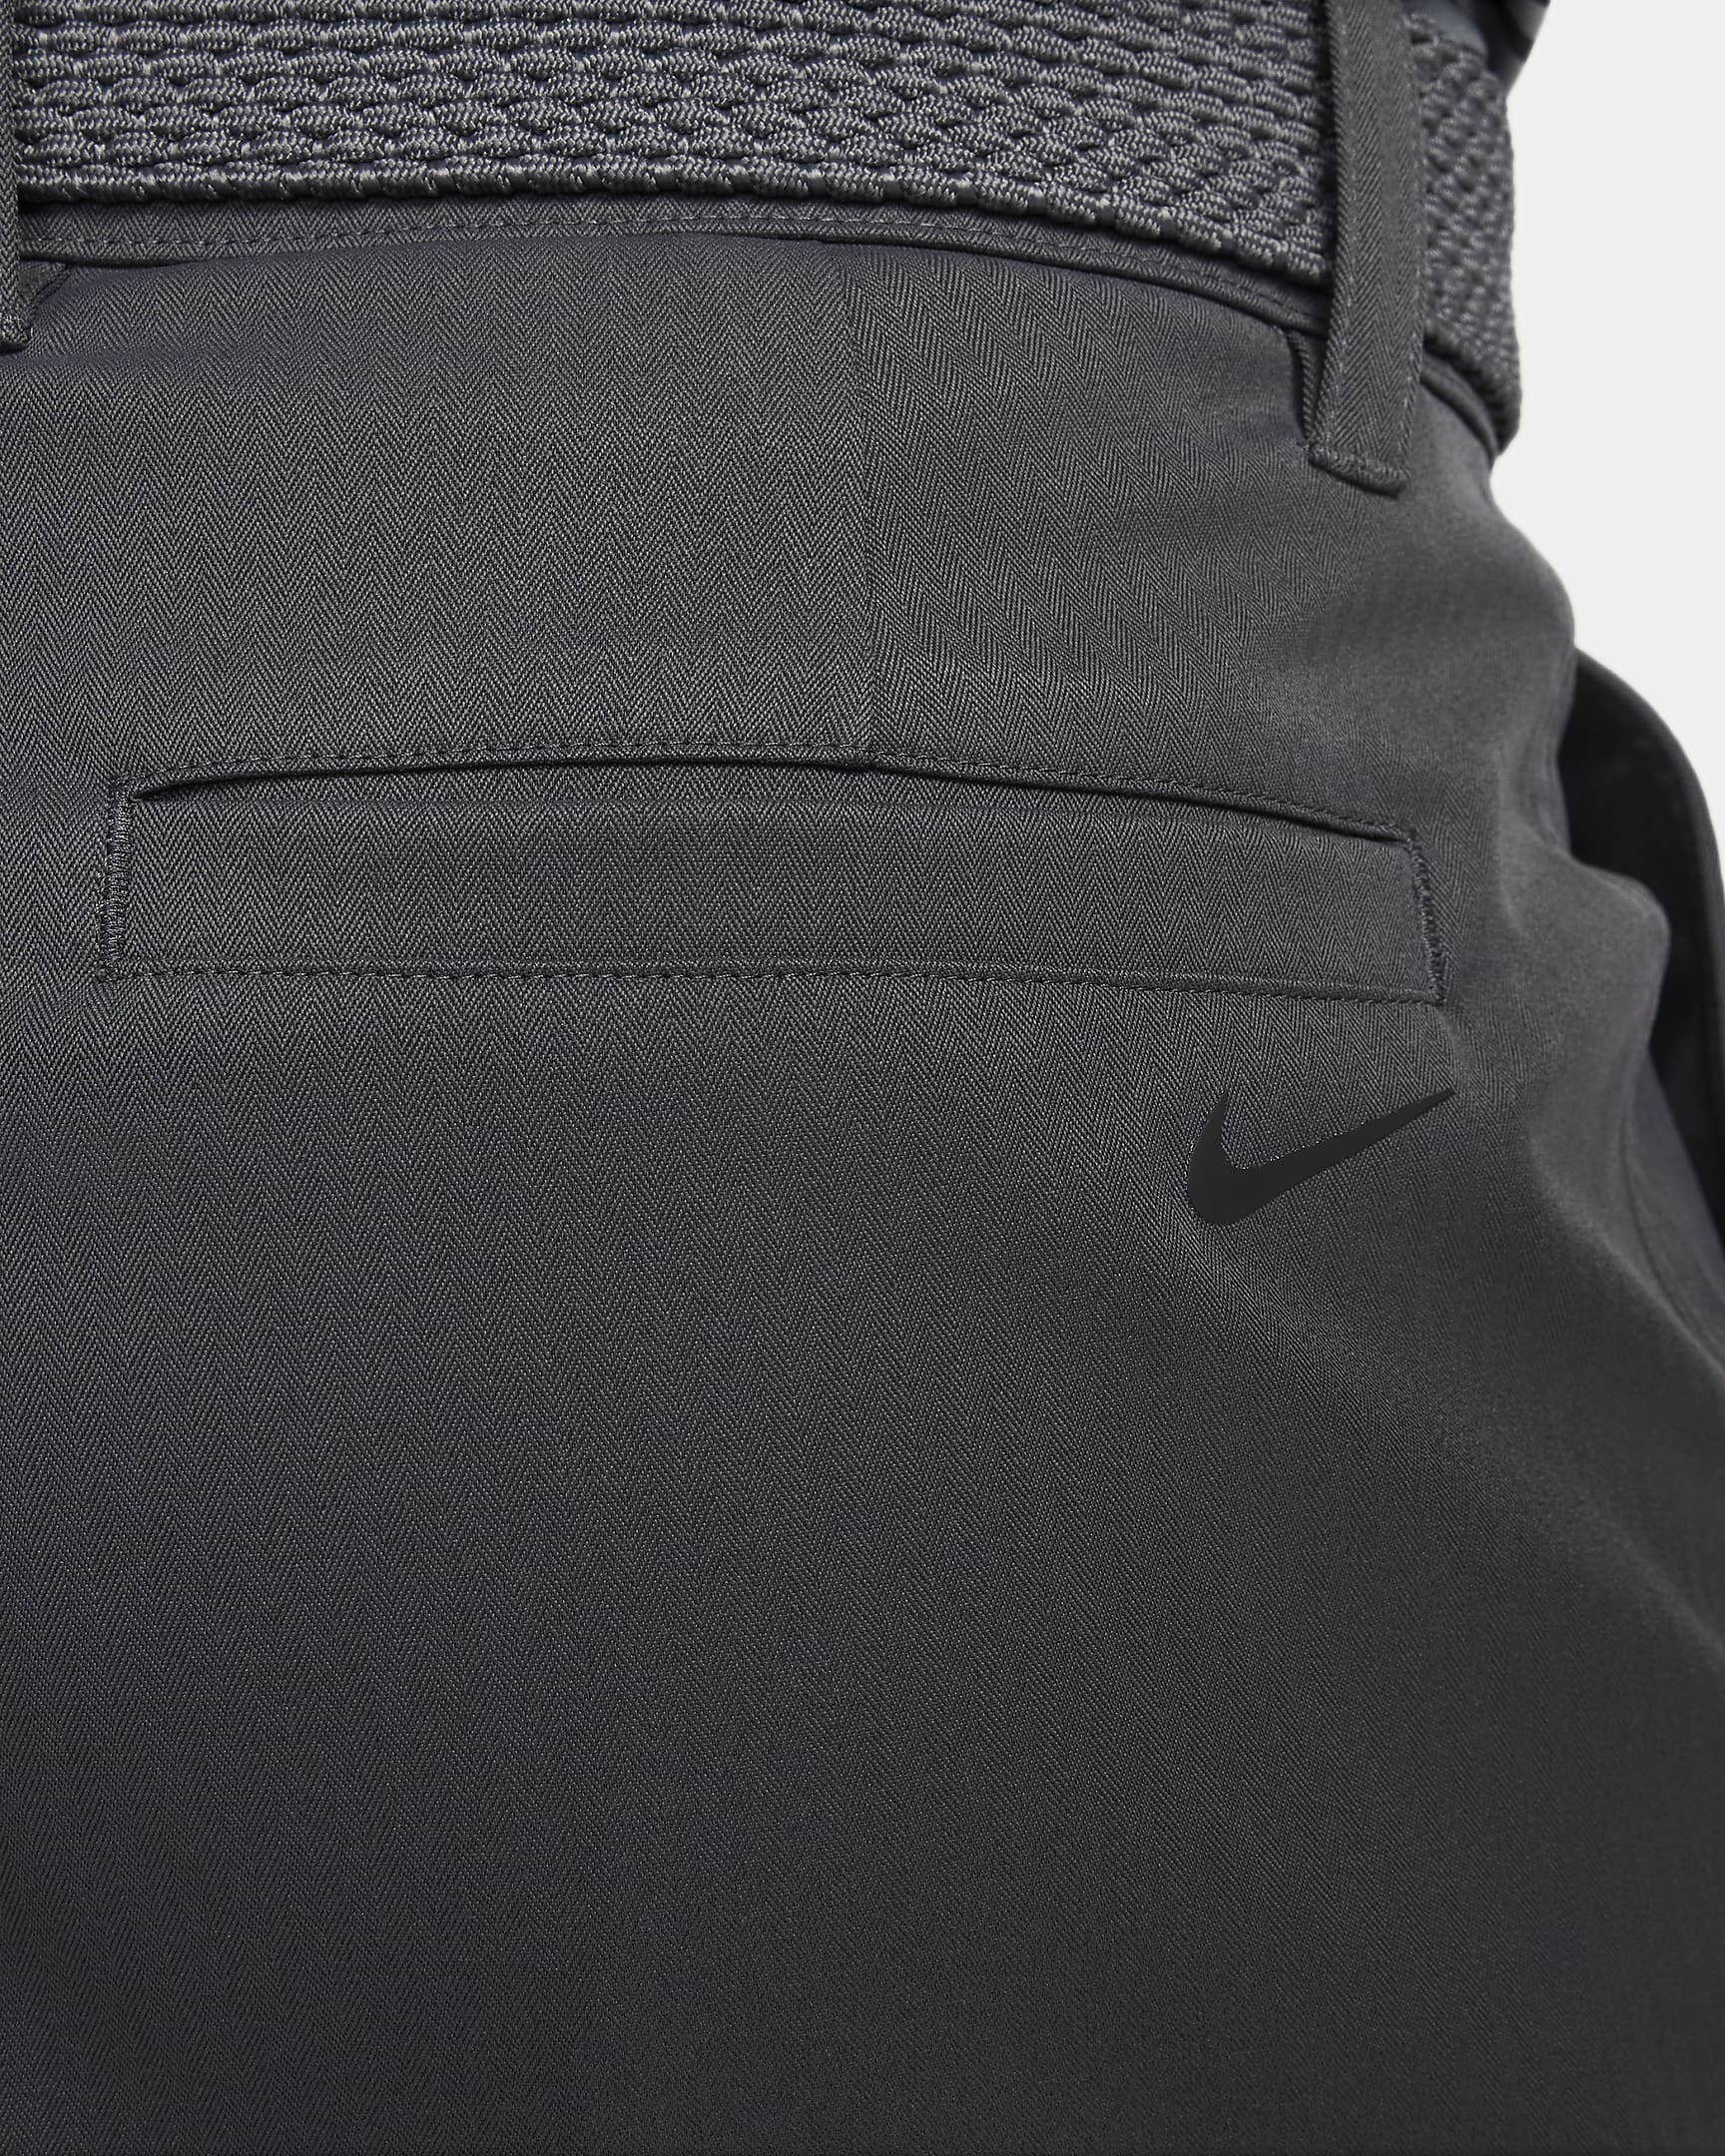 Nike Tour Men's 20cm (approx.) Chino Golf Shorts - Dark Smoke Grey/Black